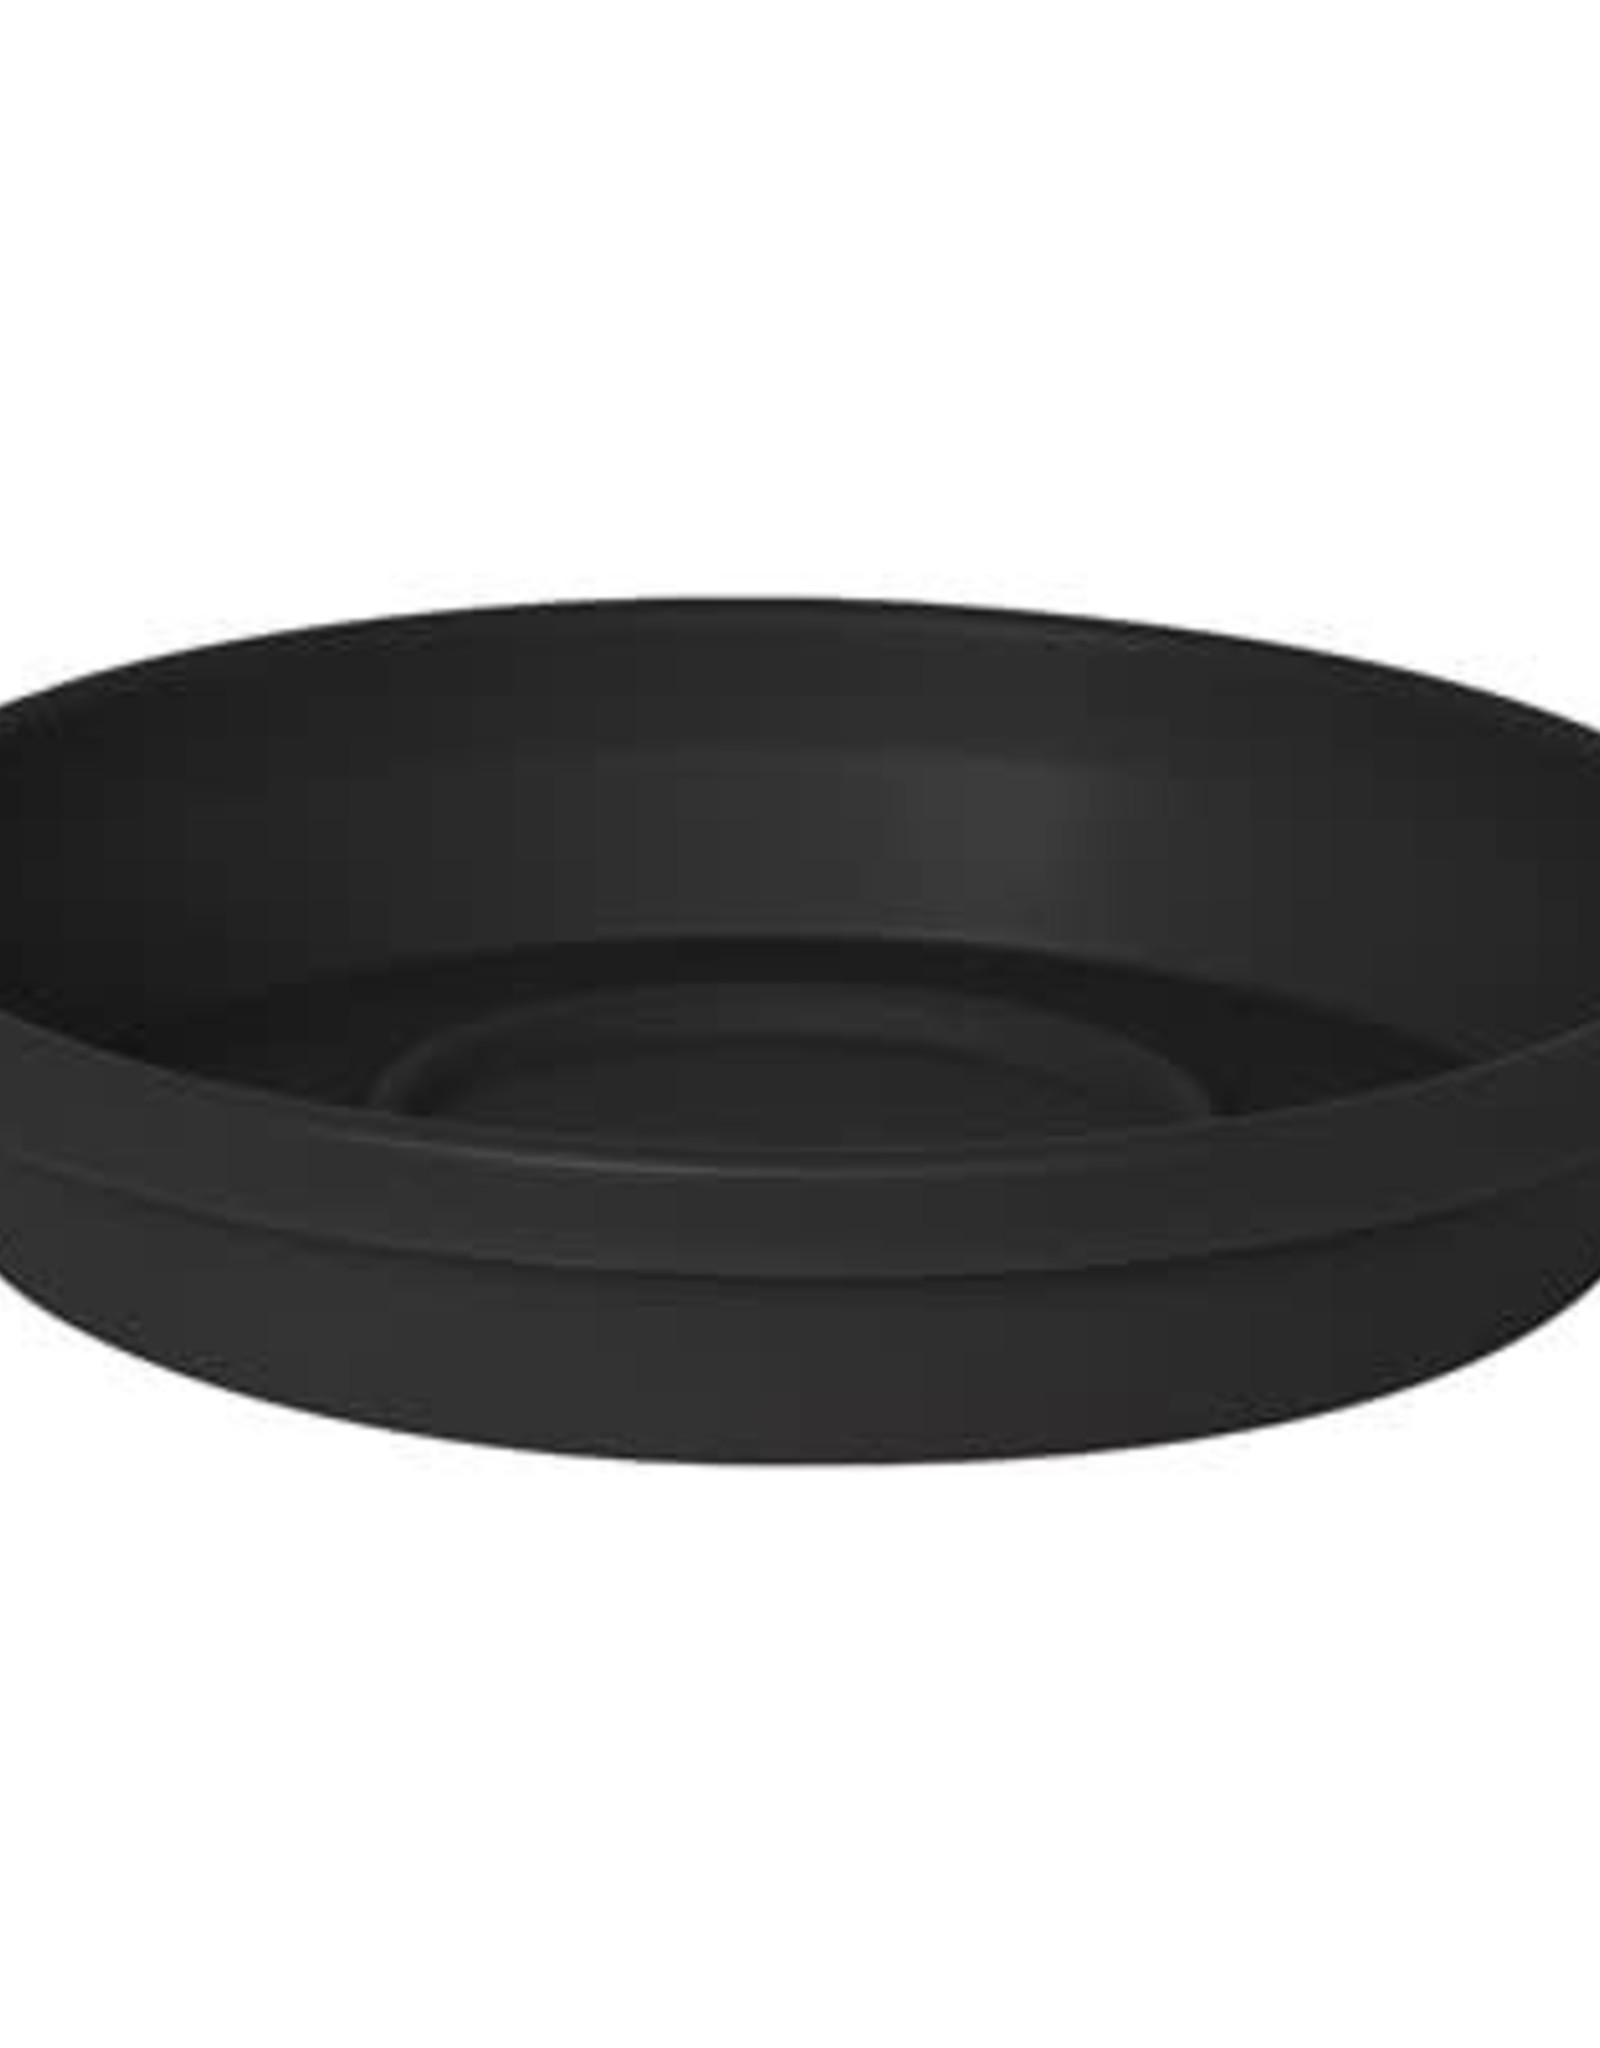 Terra Black Saucer 20 inch